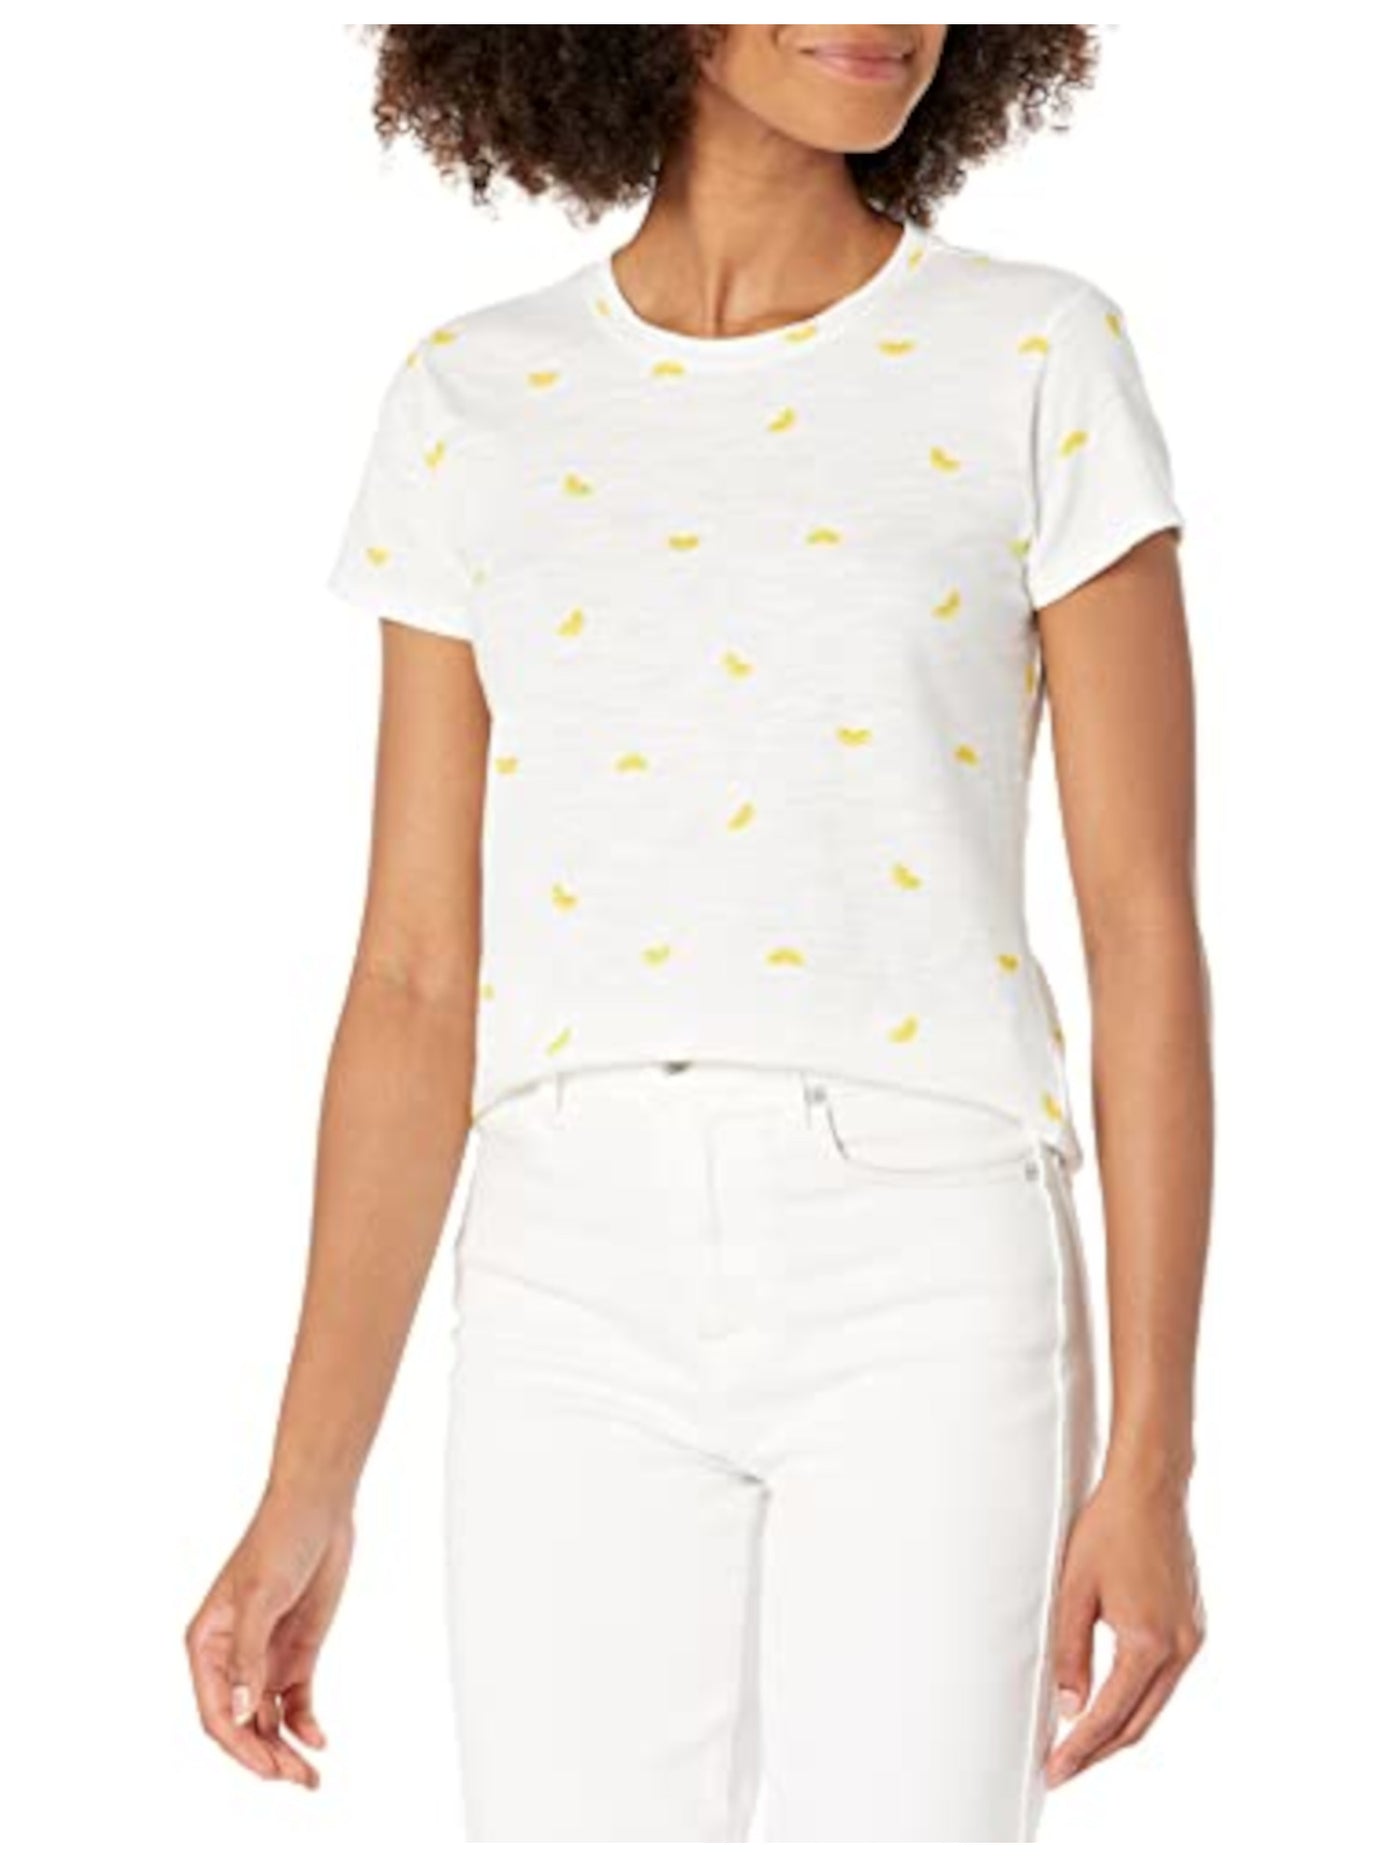 LUCKY BRAND Womens White Printed Short Sleeve Crew Neck T-Shirt XL